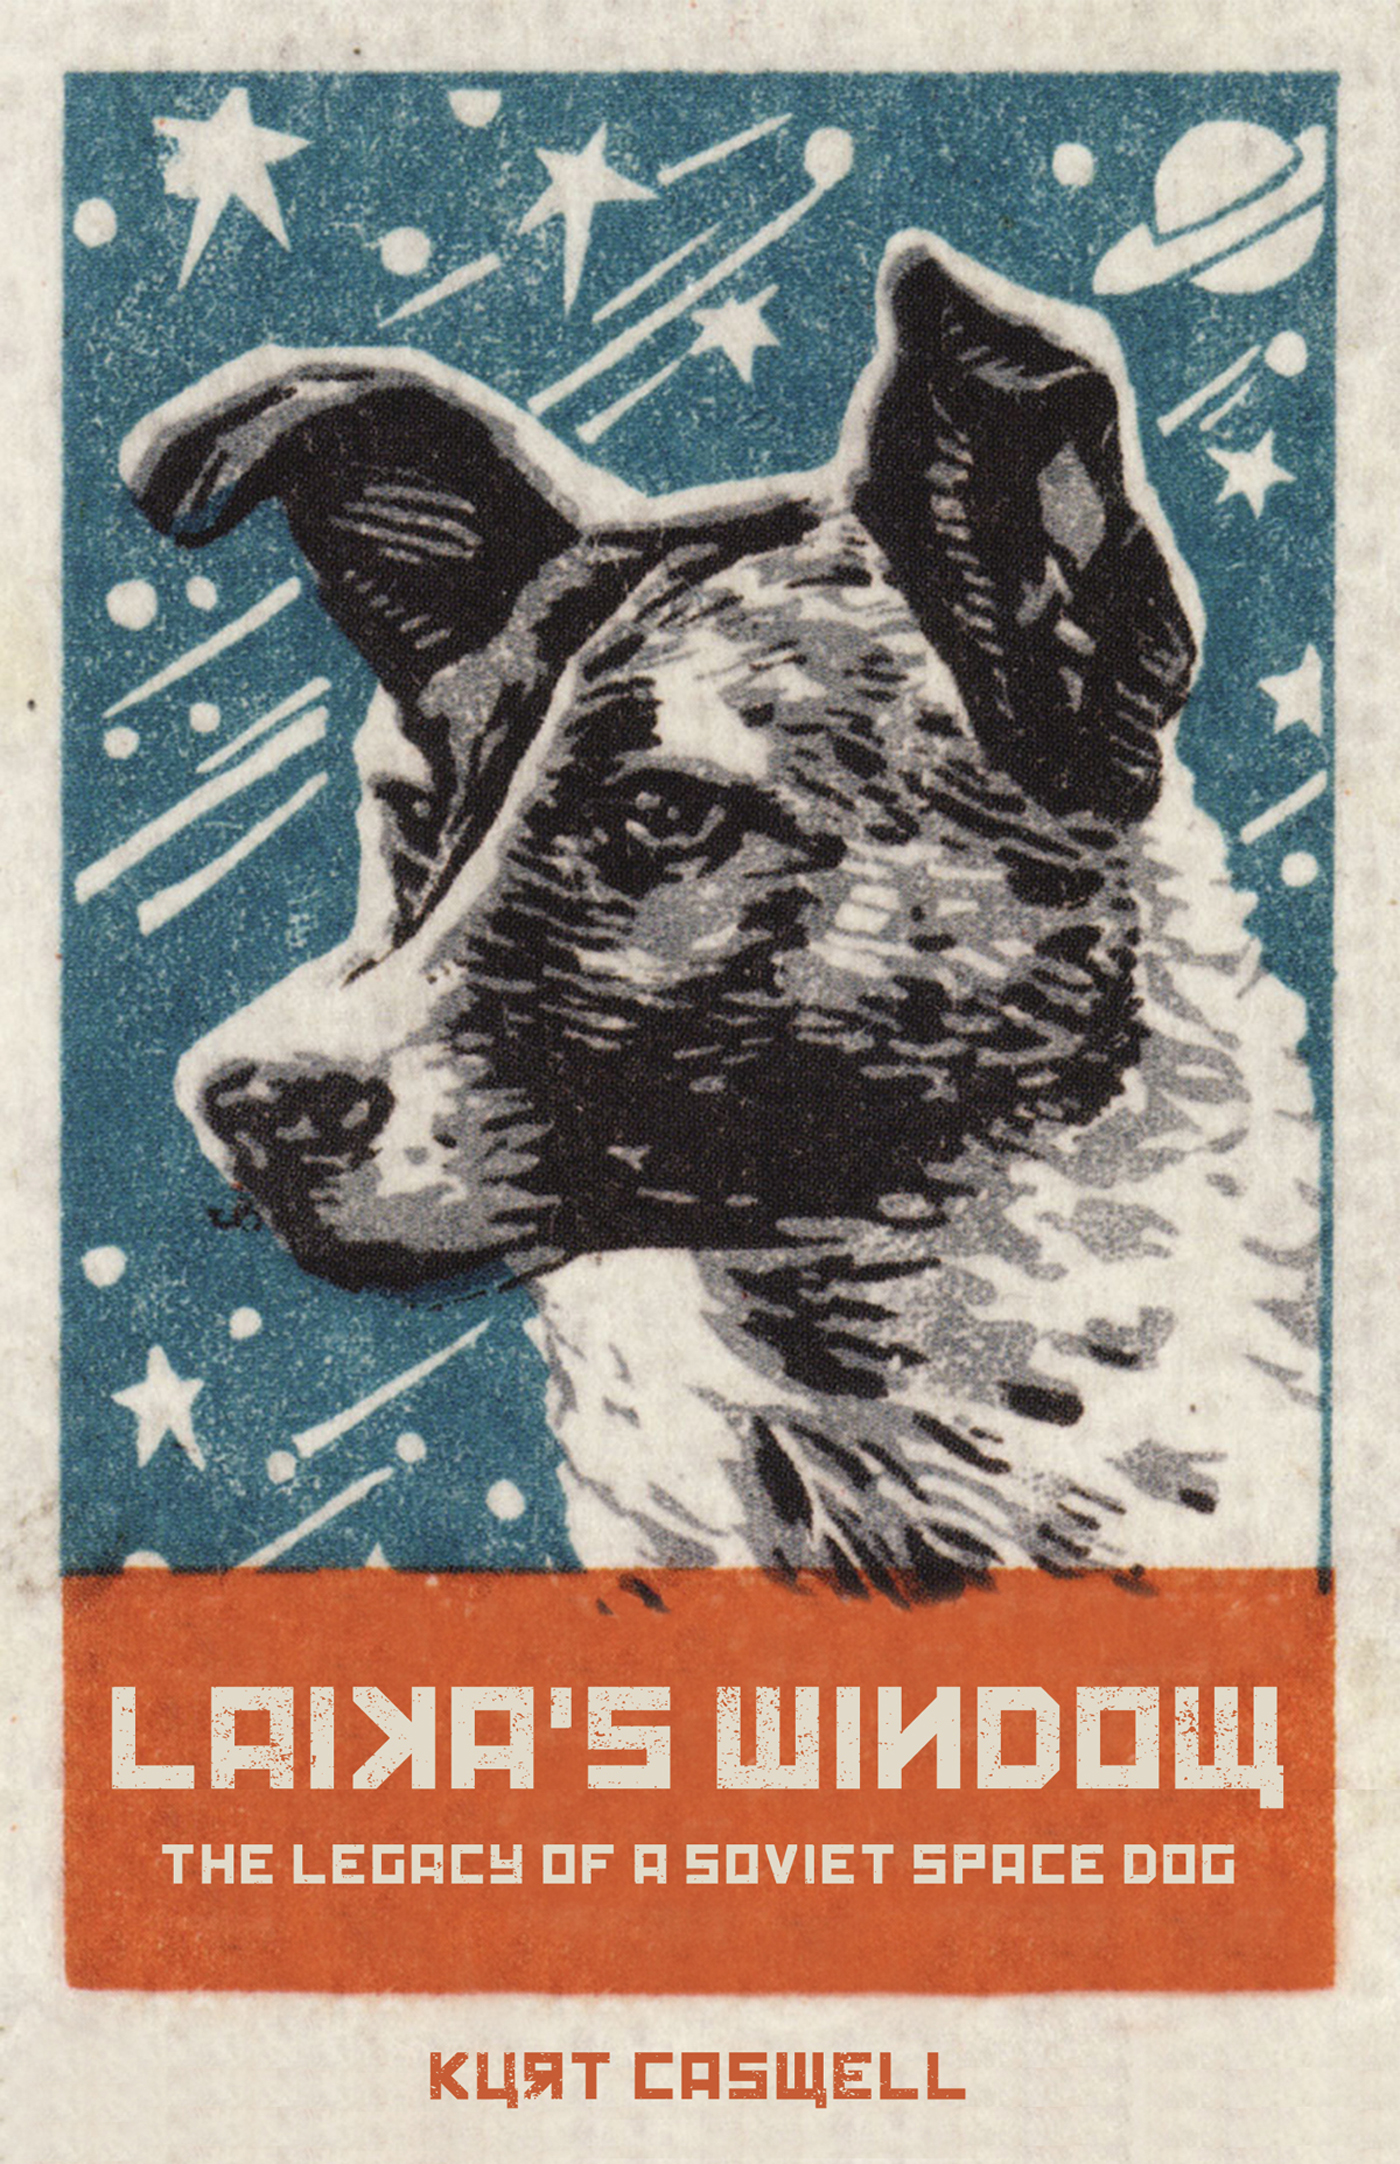 Laikas Window Laikas Window The Legacy of a Soviet Space Dog KURT CASWELL - photo 1